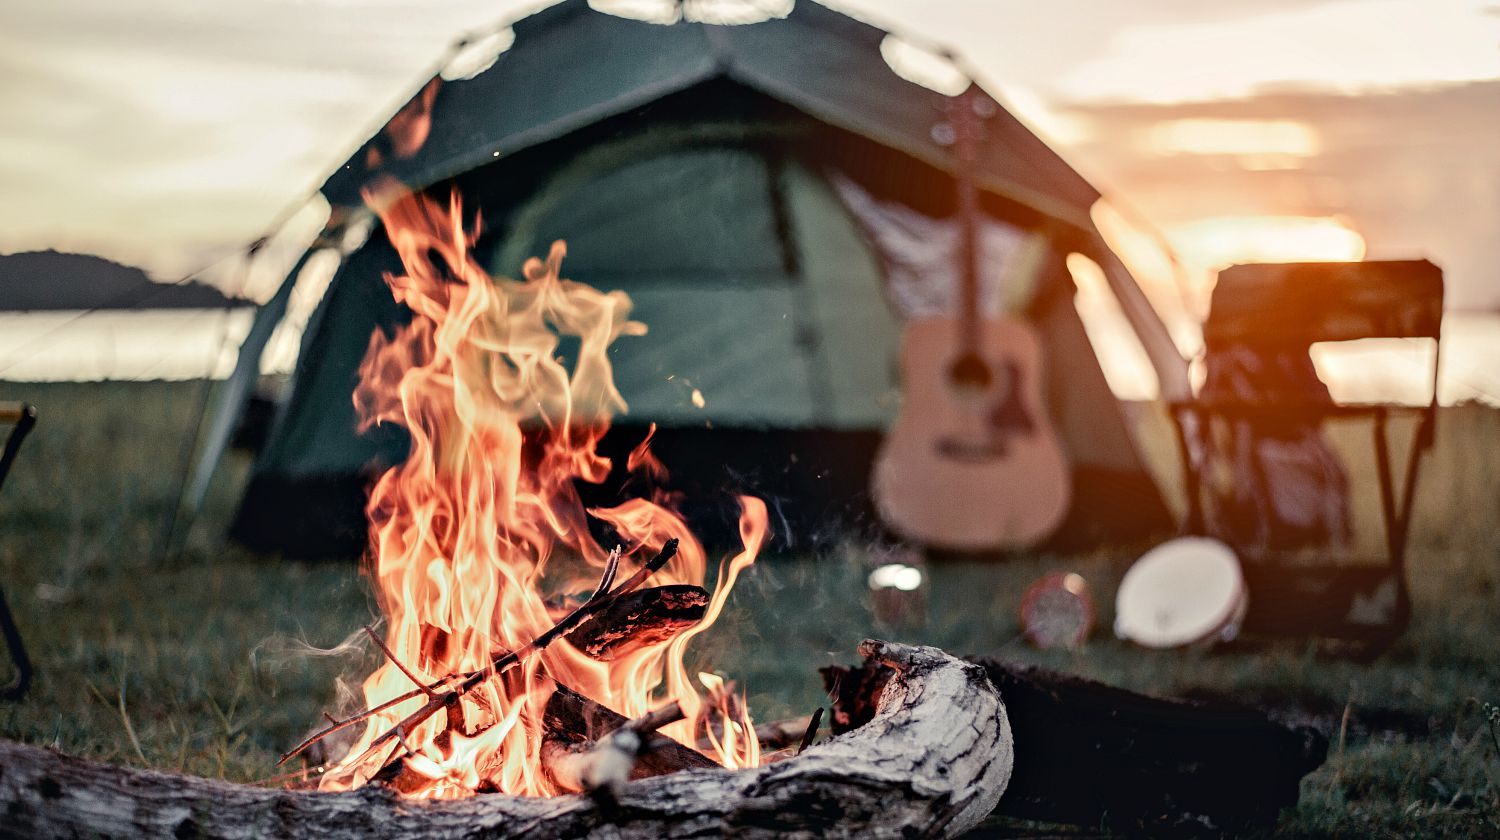 Campfire, tent, guitar, etc. at campsite | Unique Camping Tricks | Camp Like A Redneck | Featured